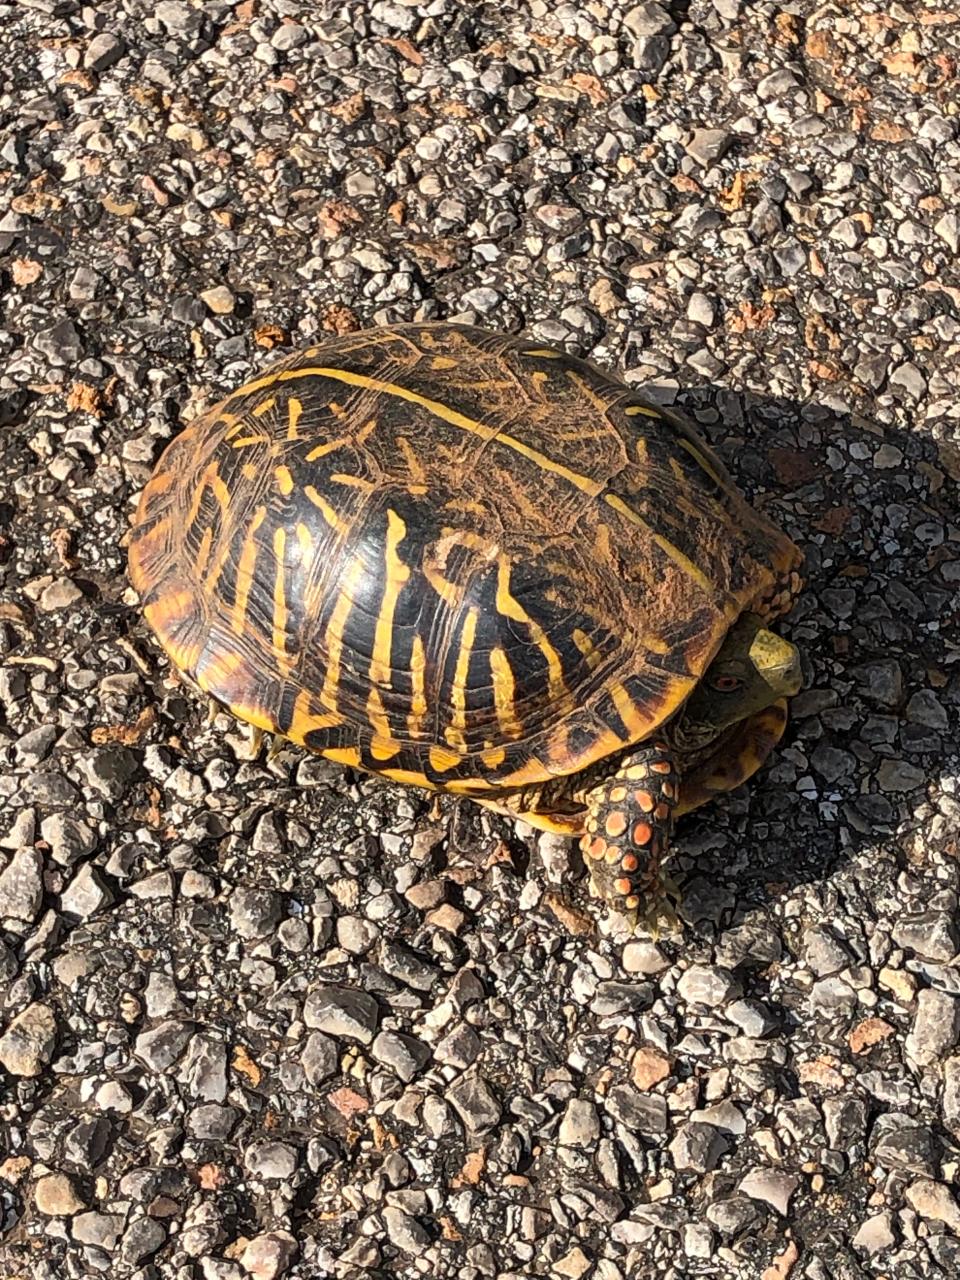 Ornate box turtle, male, seen near Iowa Park off VanLowe Road. Note orange spots on front legs and reddish orange eyes.